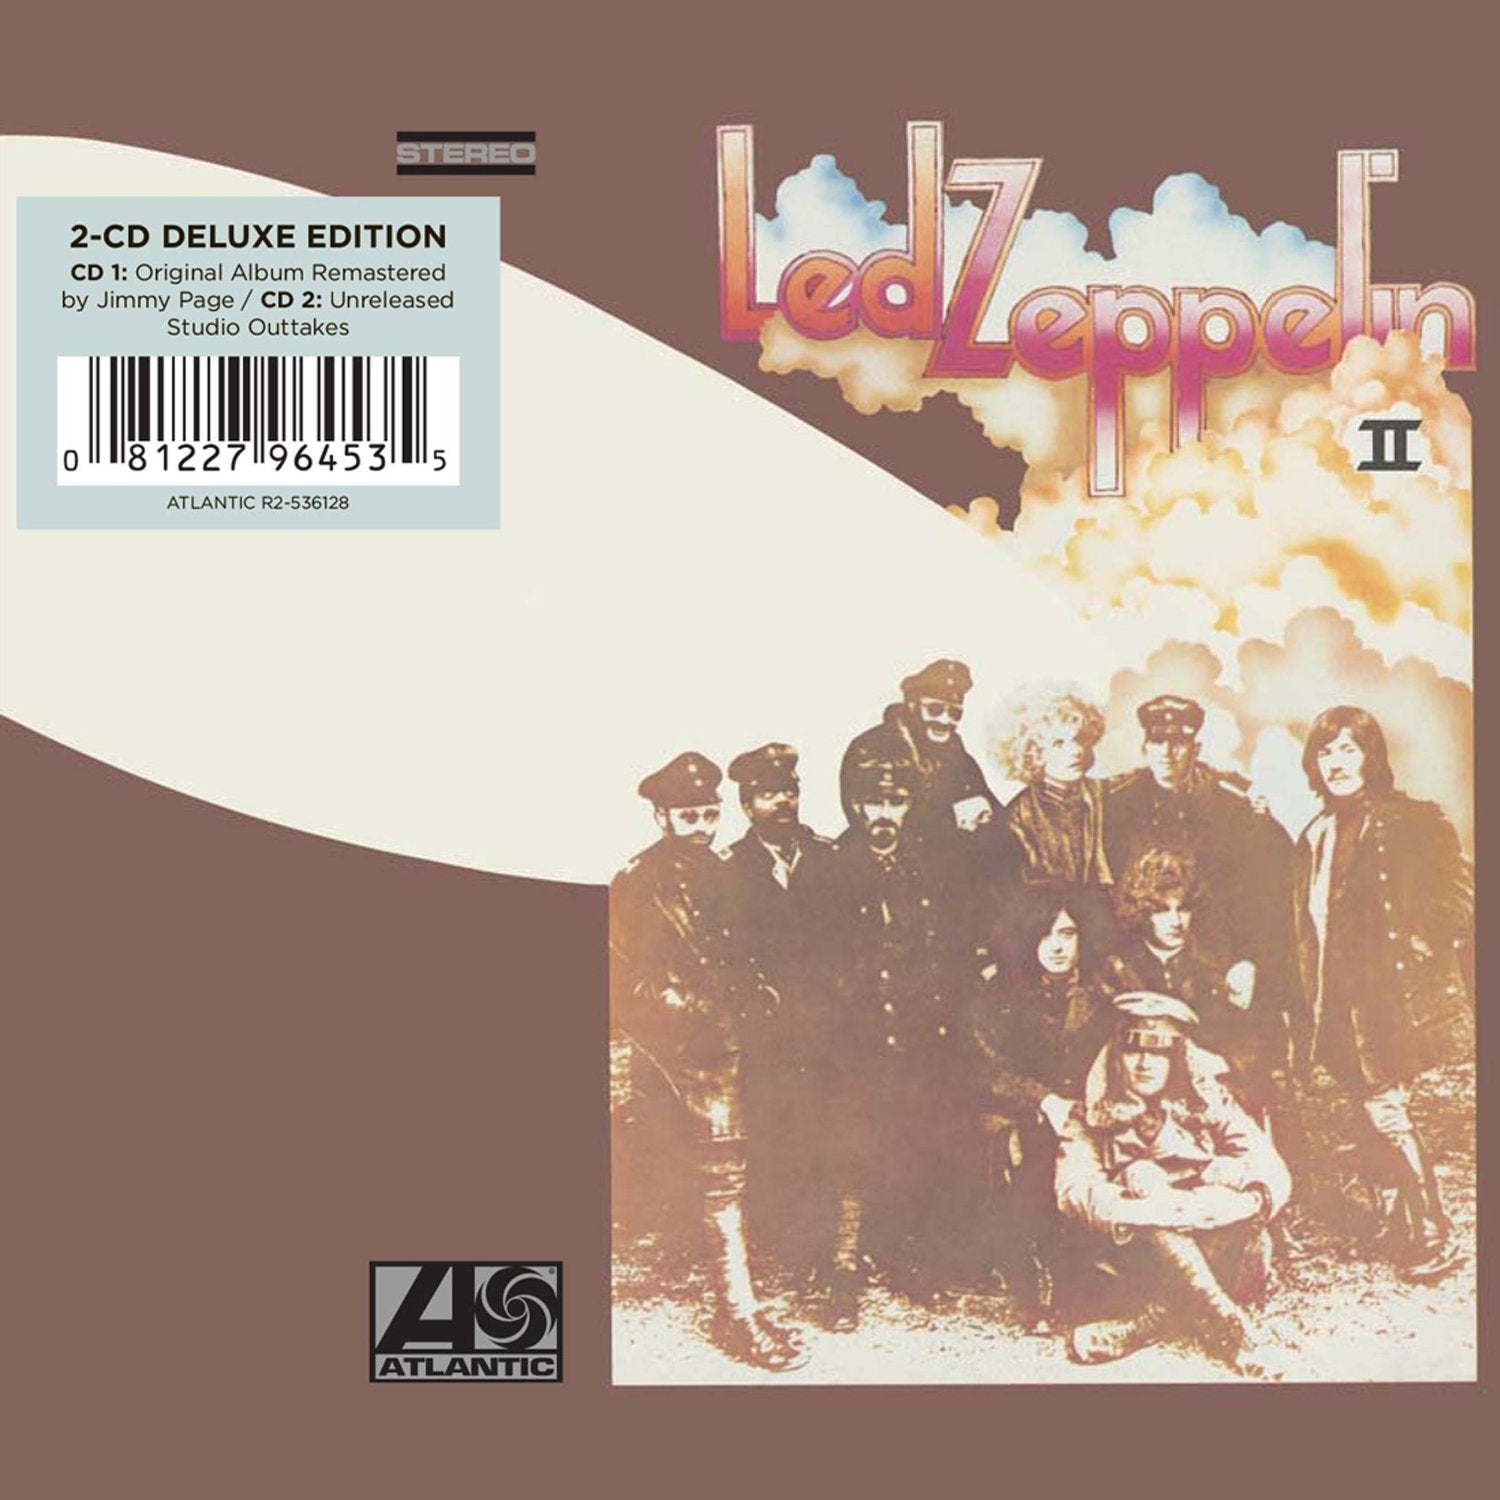 Led Zeppelin "Led Zeppelin II" 2 CD